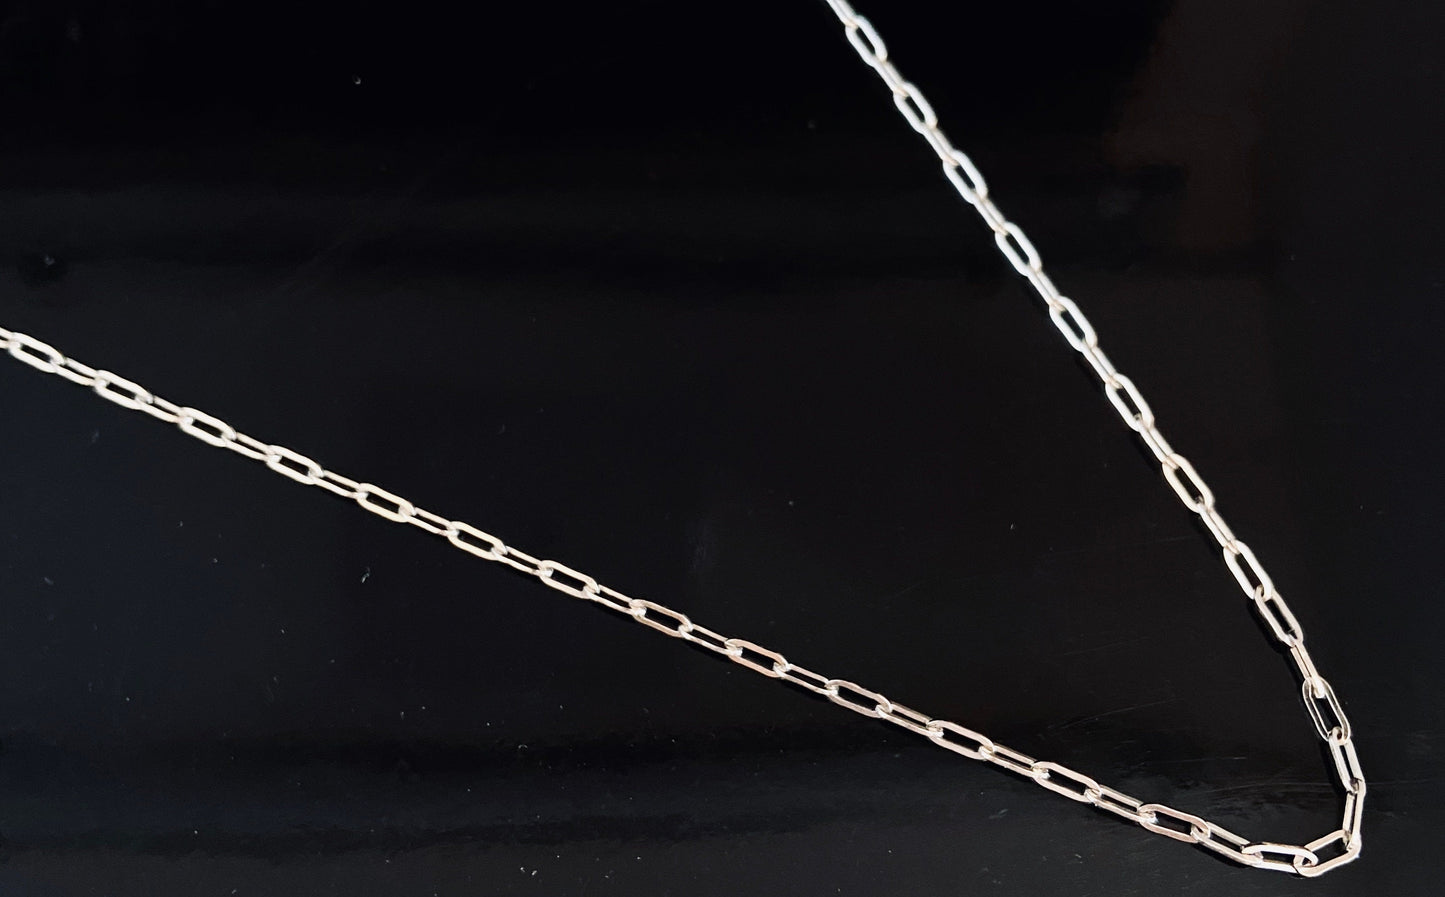 Paper Clip Link Chain Necklace